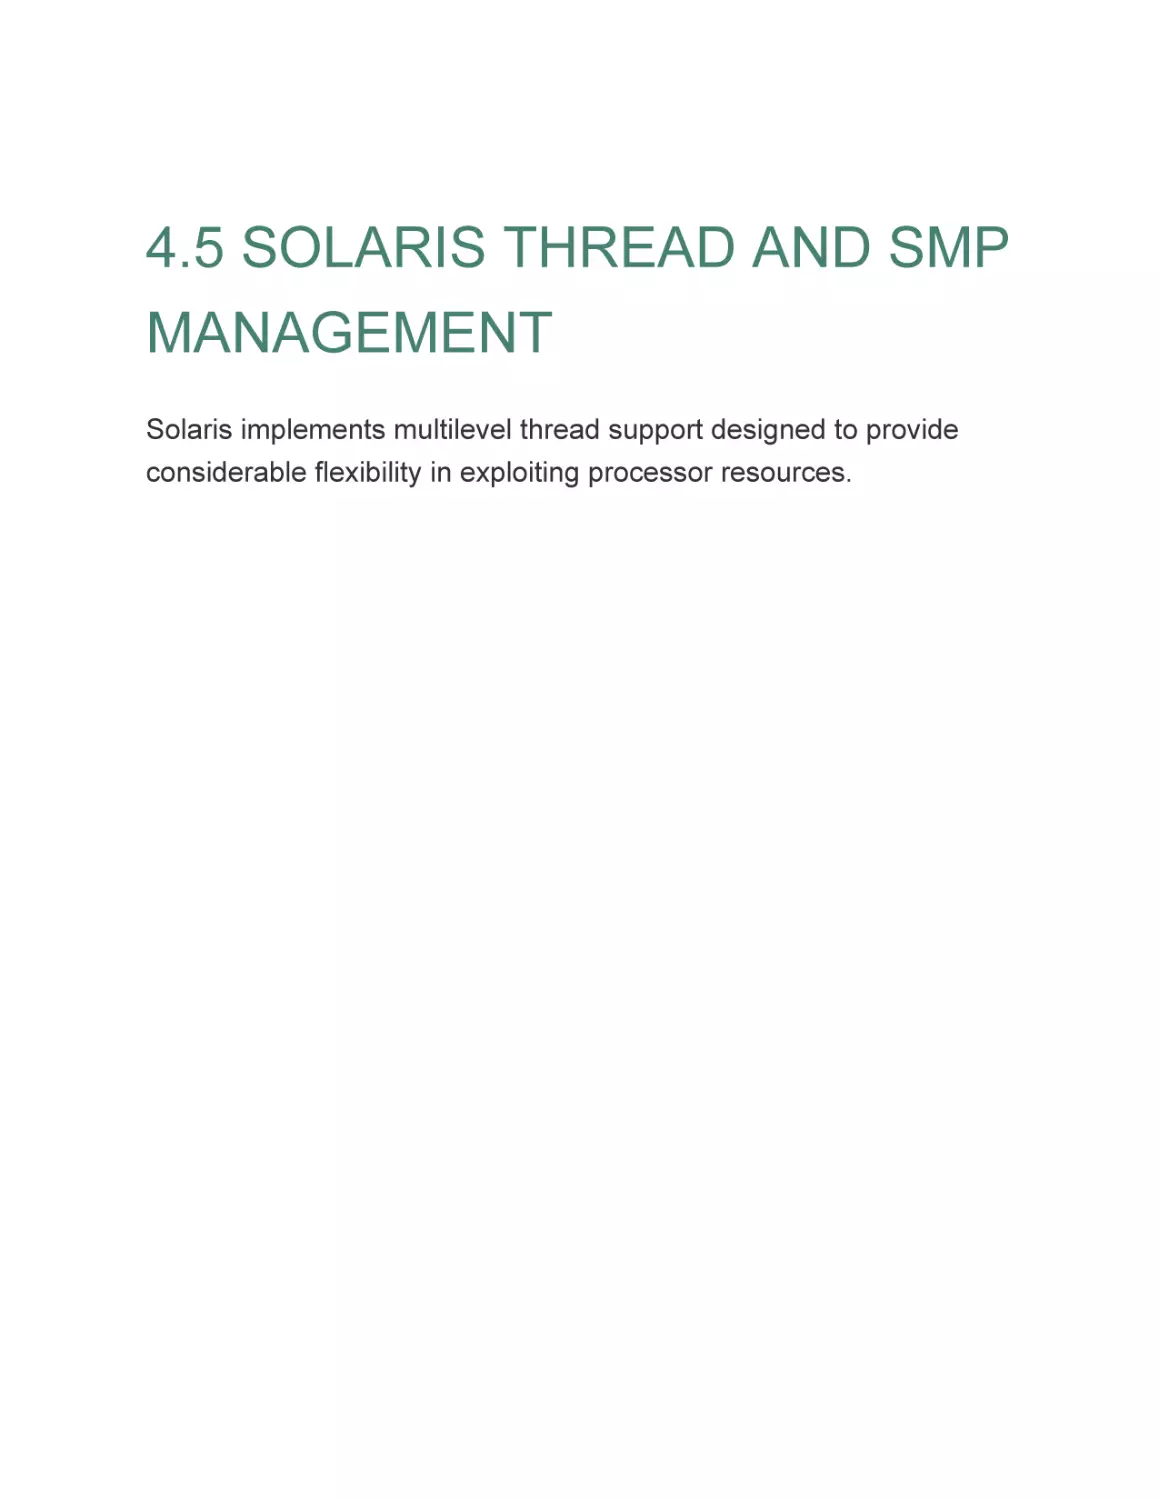 4.5 SOLARIS THREAD AND SMP MANAGEMENT